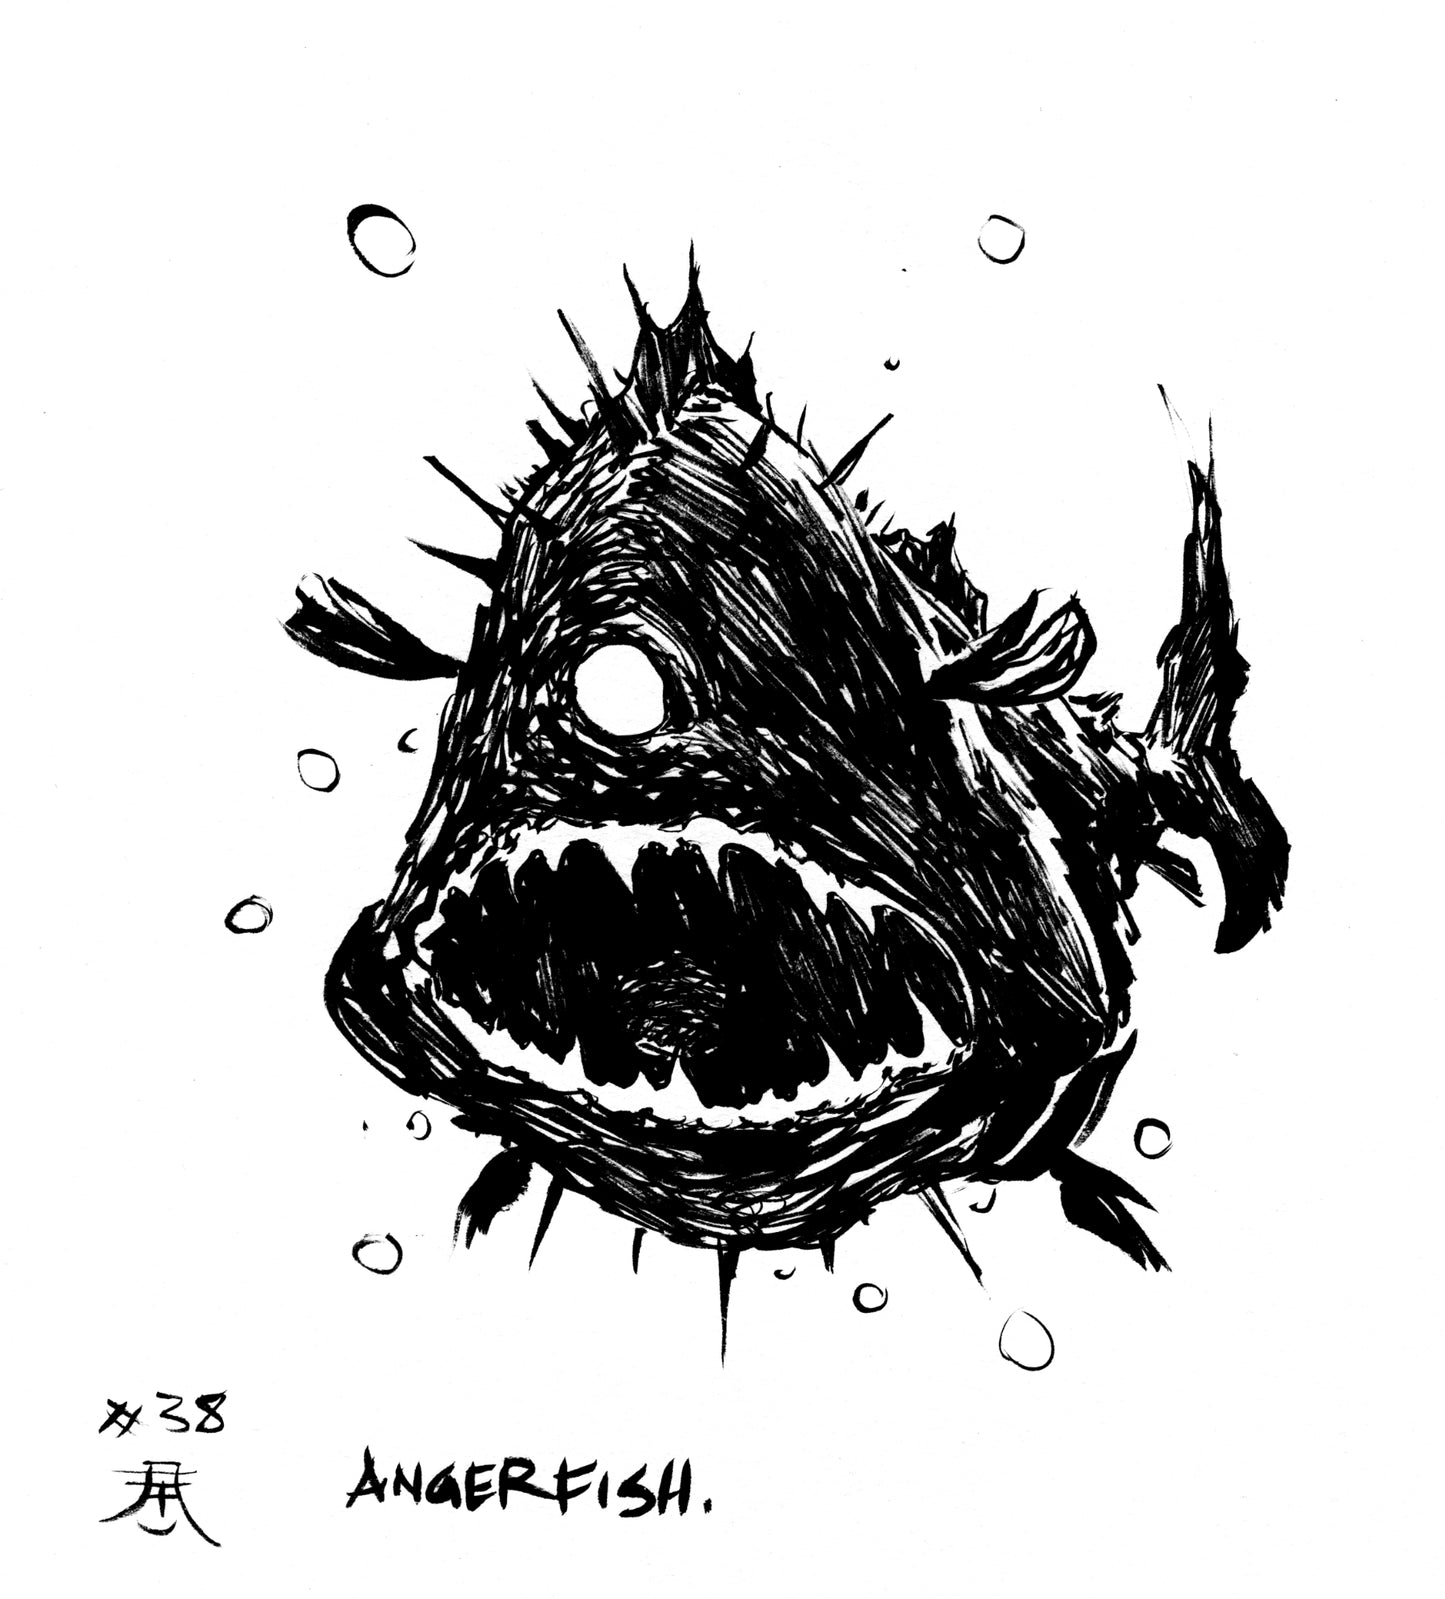 # 38 - Angerfish